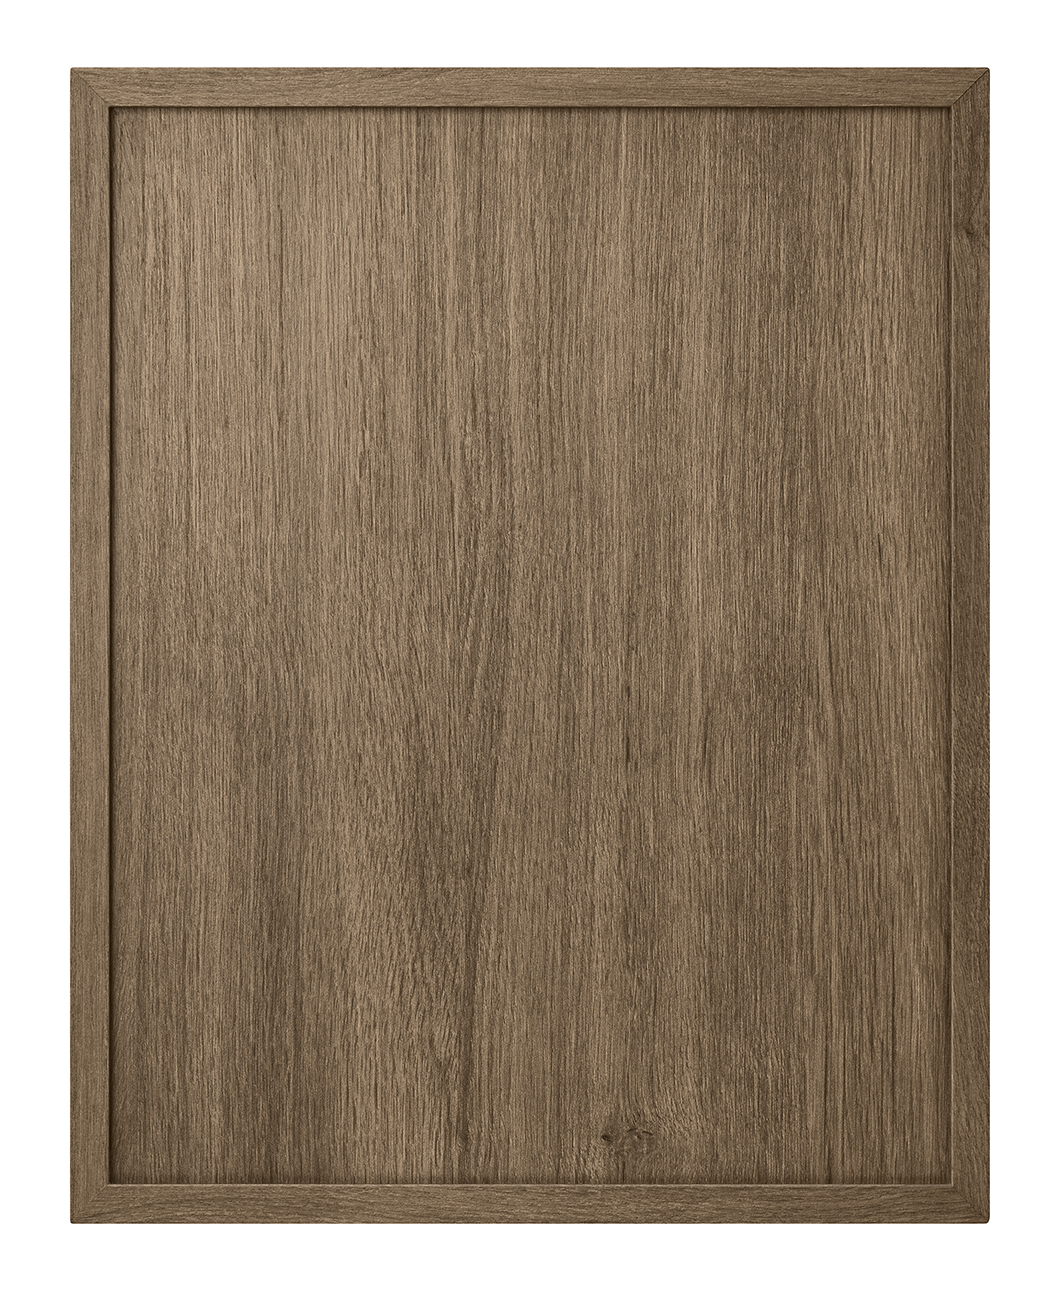 Kline cabinet door in Tafisa 582 Fashionista